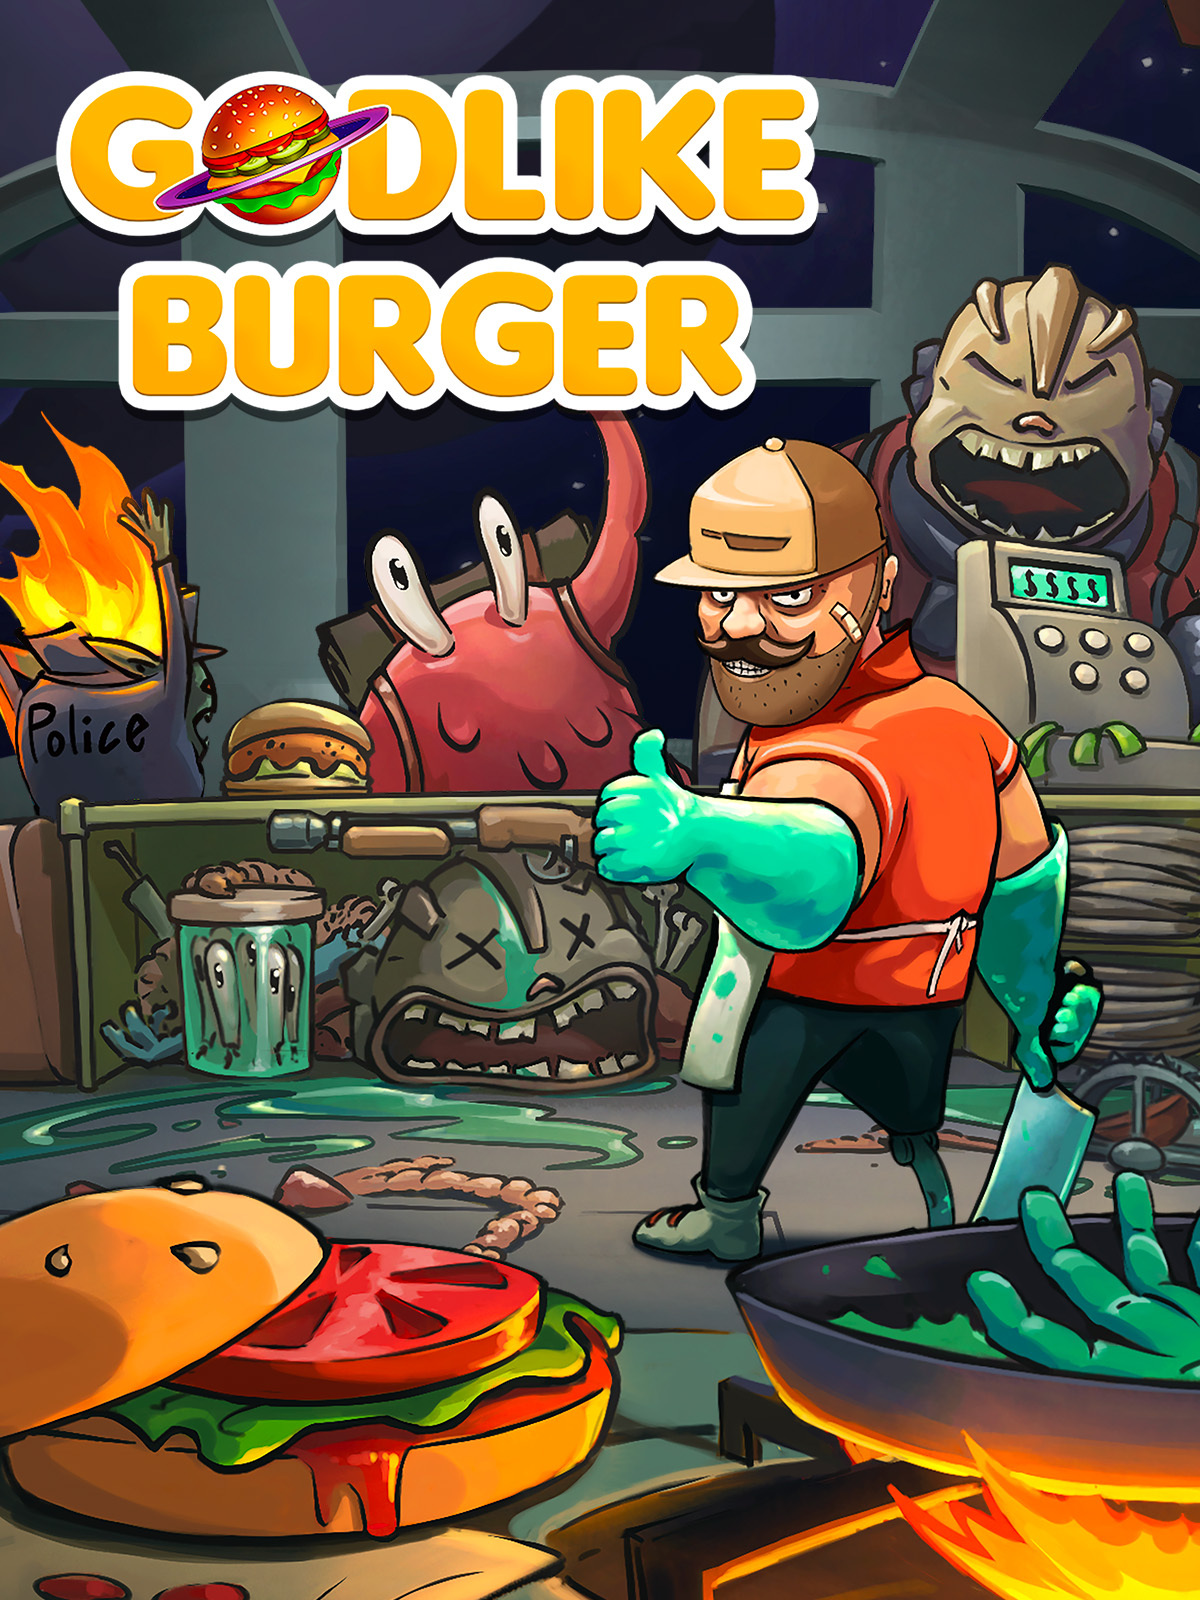 jaquette du jeu vidéo Godlike Burger